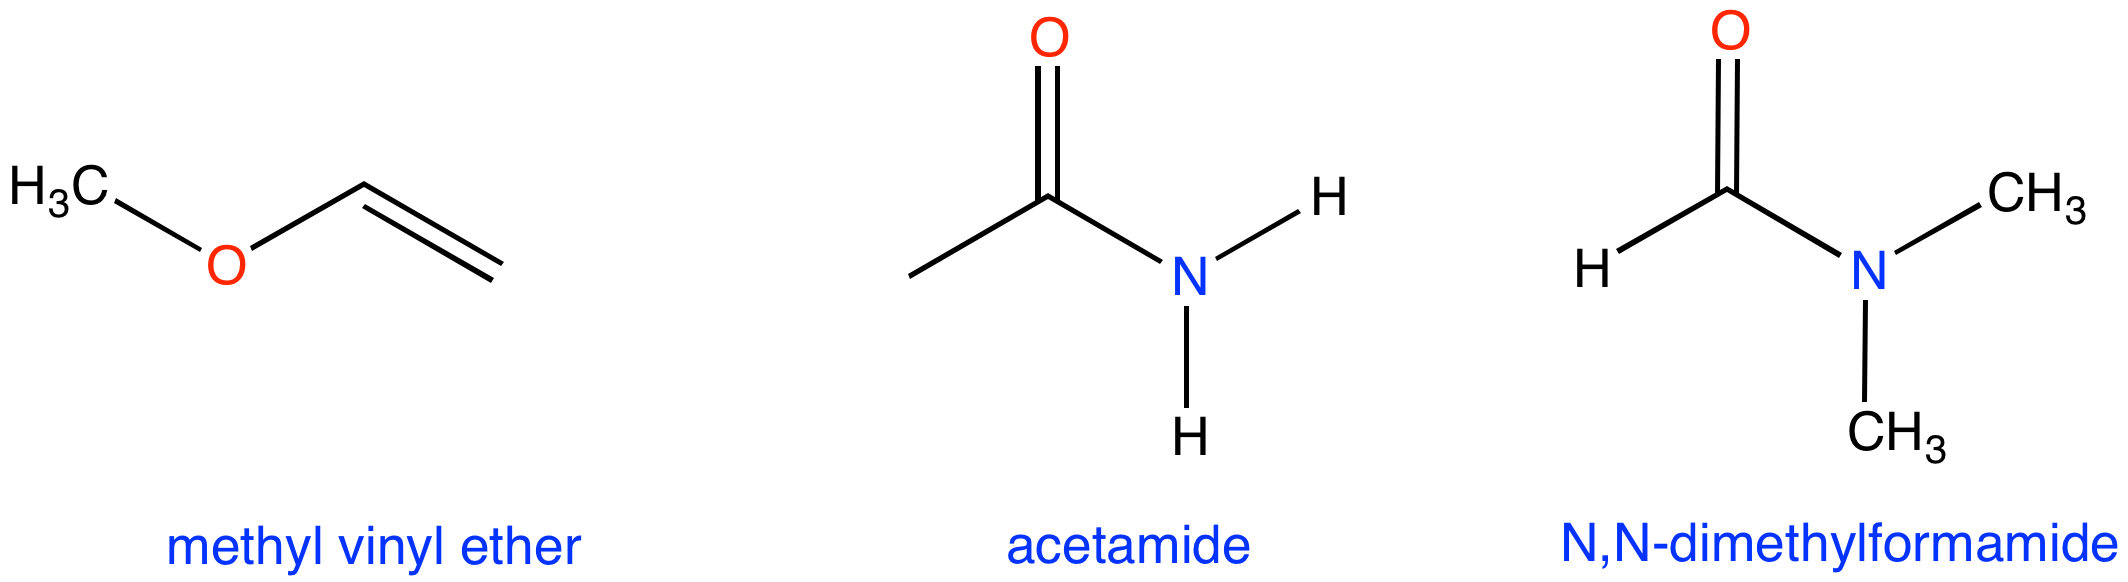 vinyl ether acetamide dimethylformamide